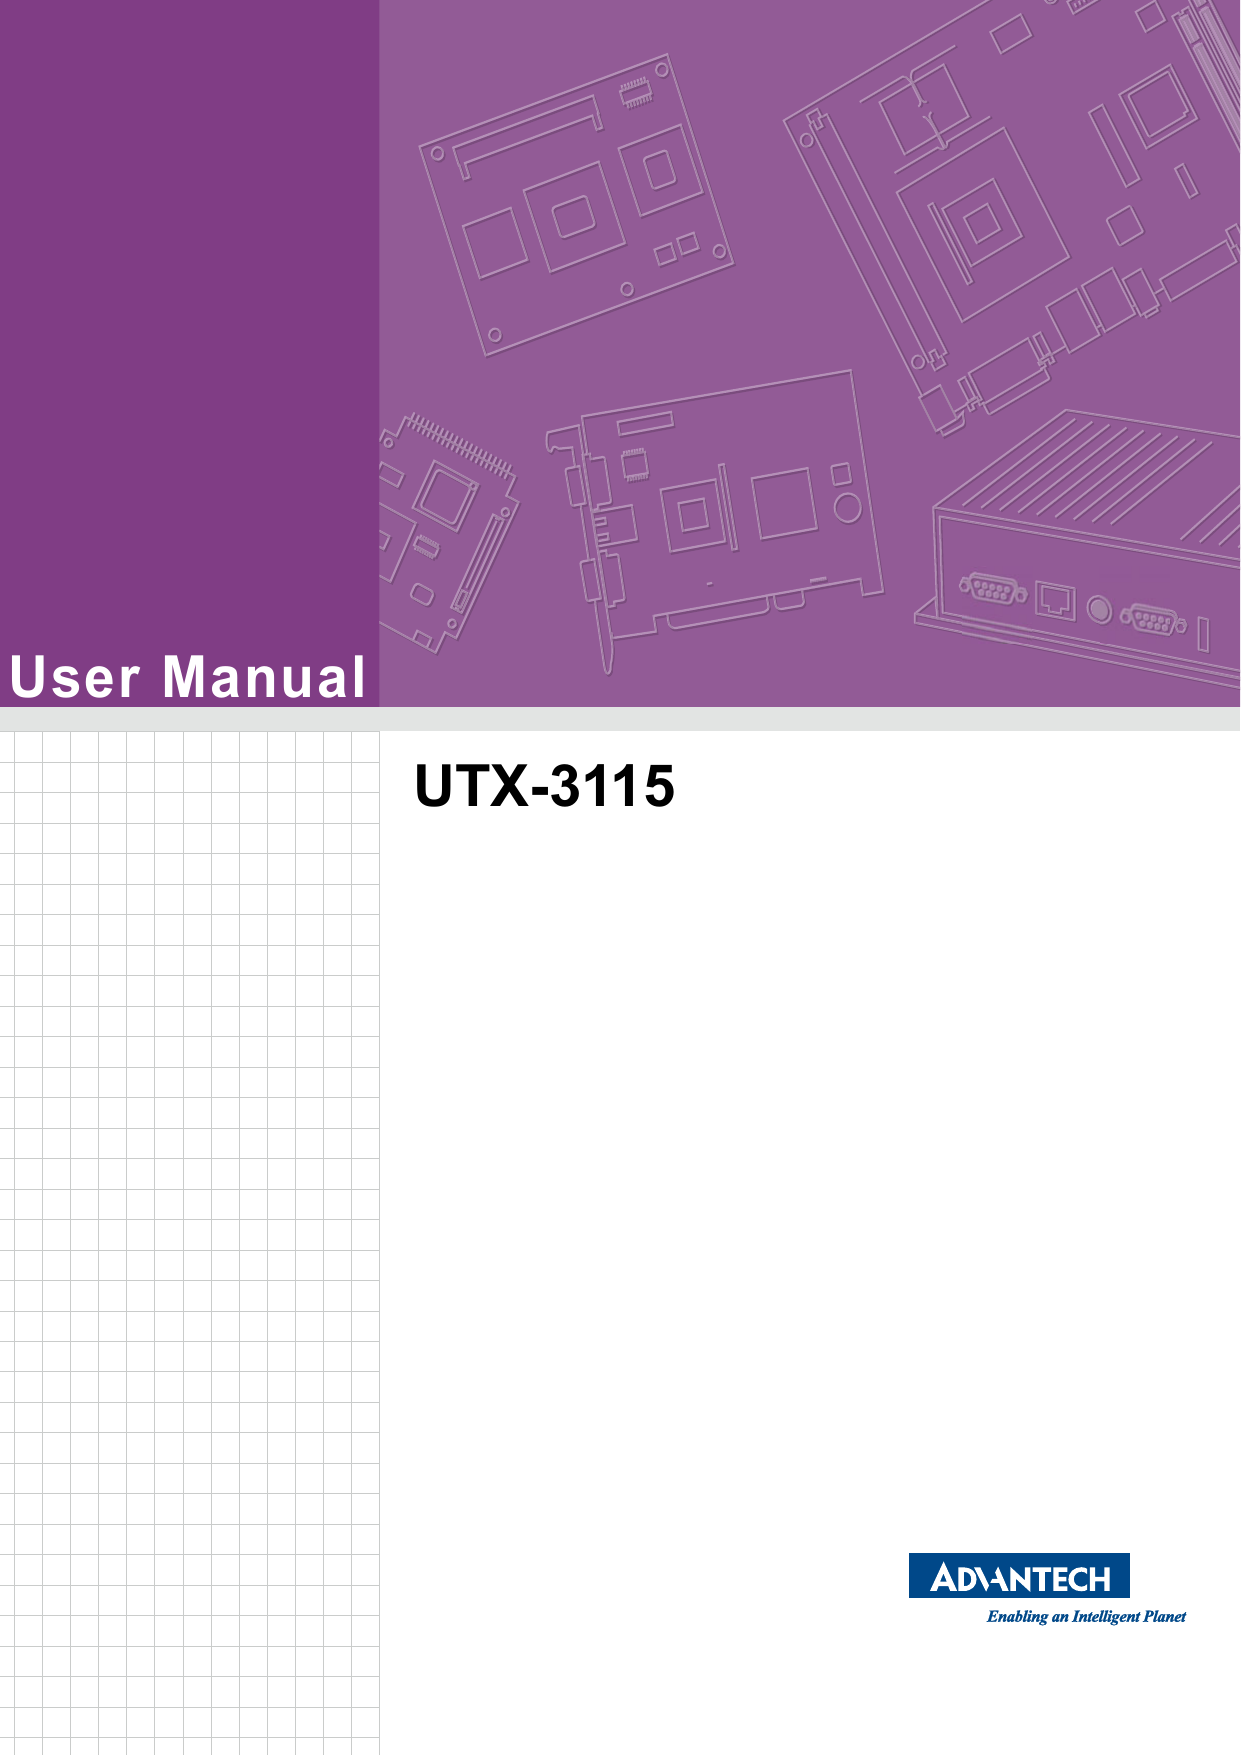 User ManualUTX-3115